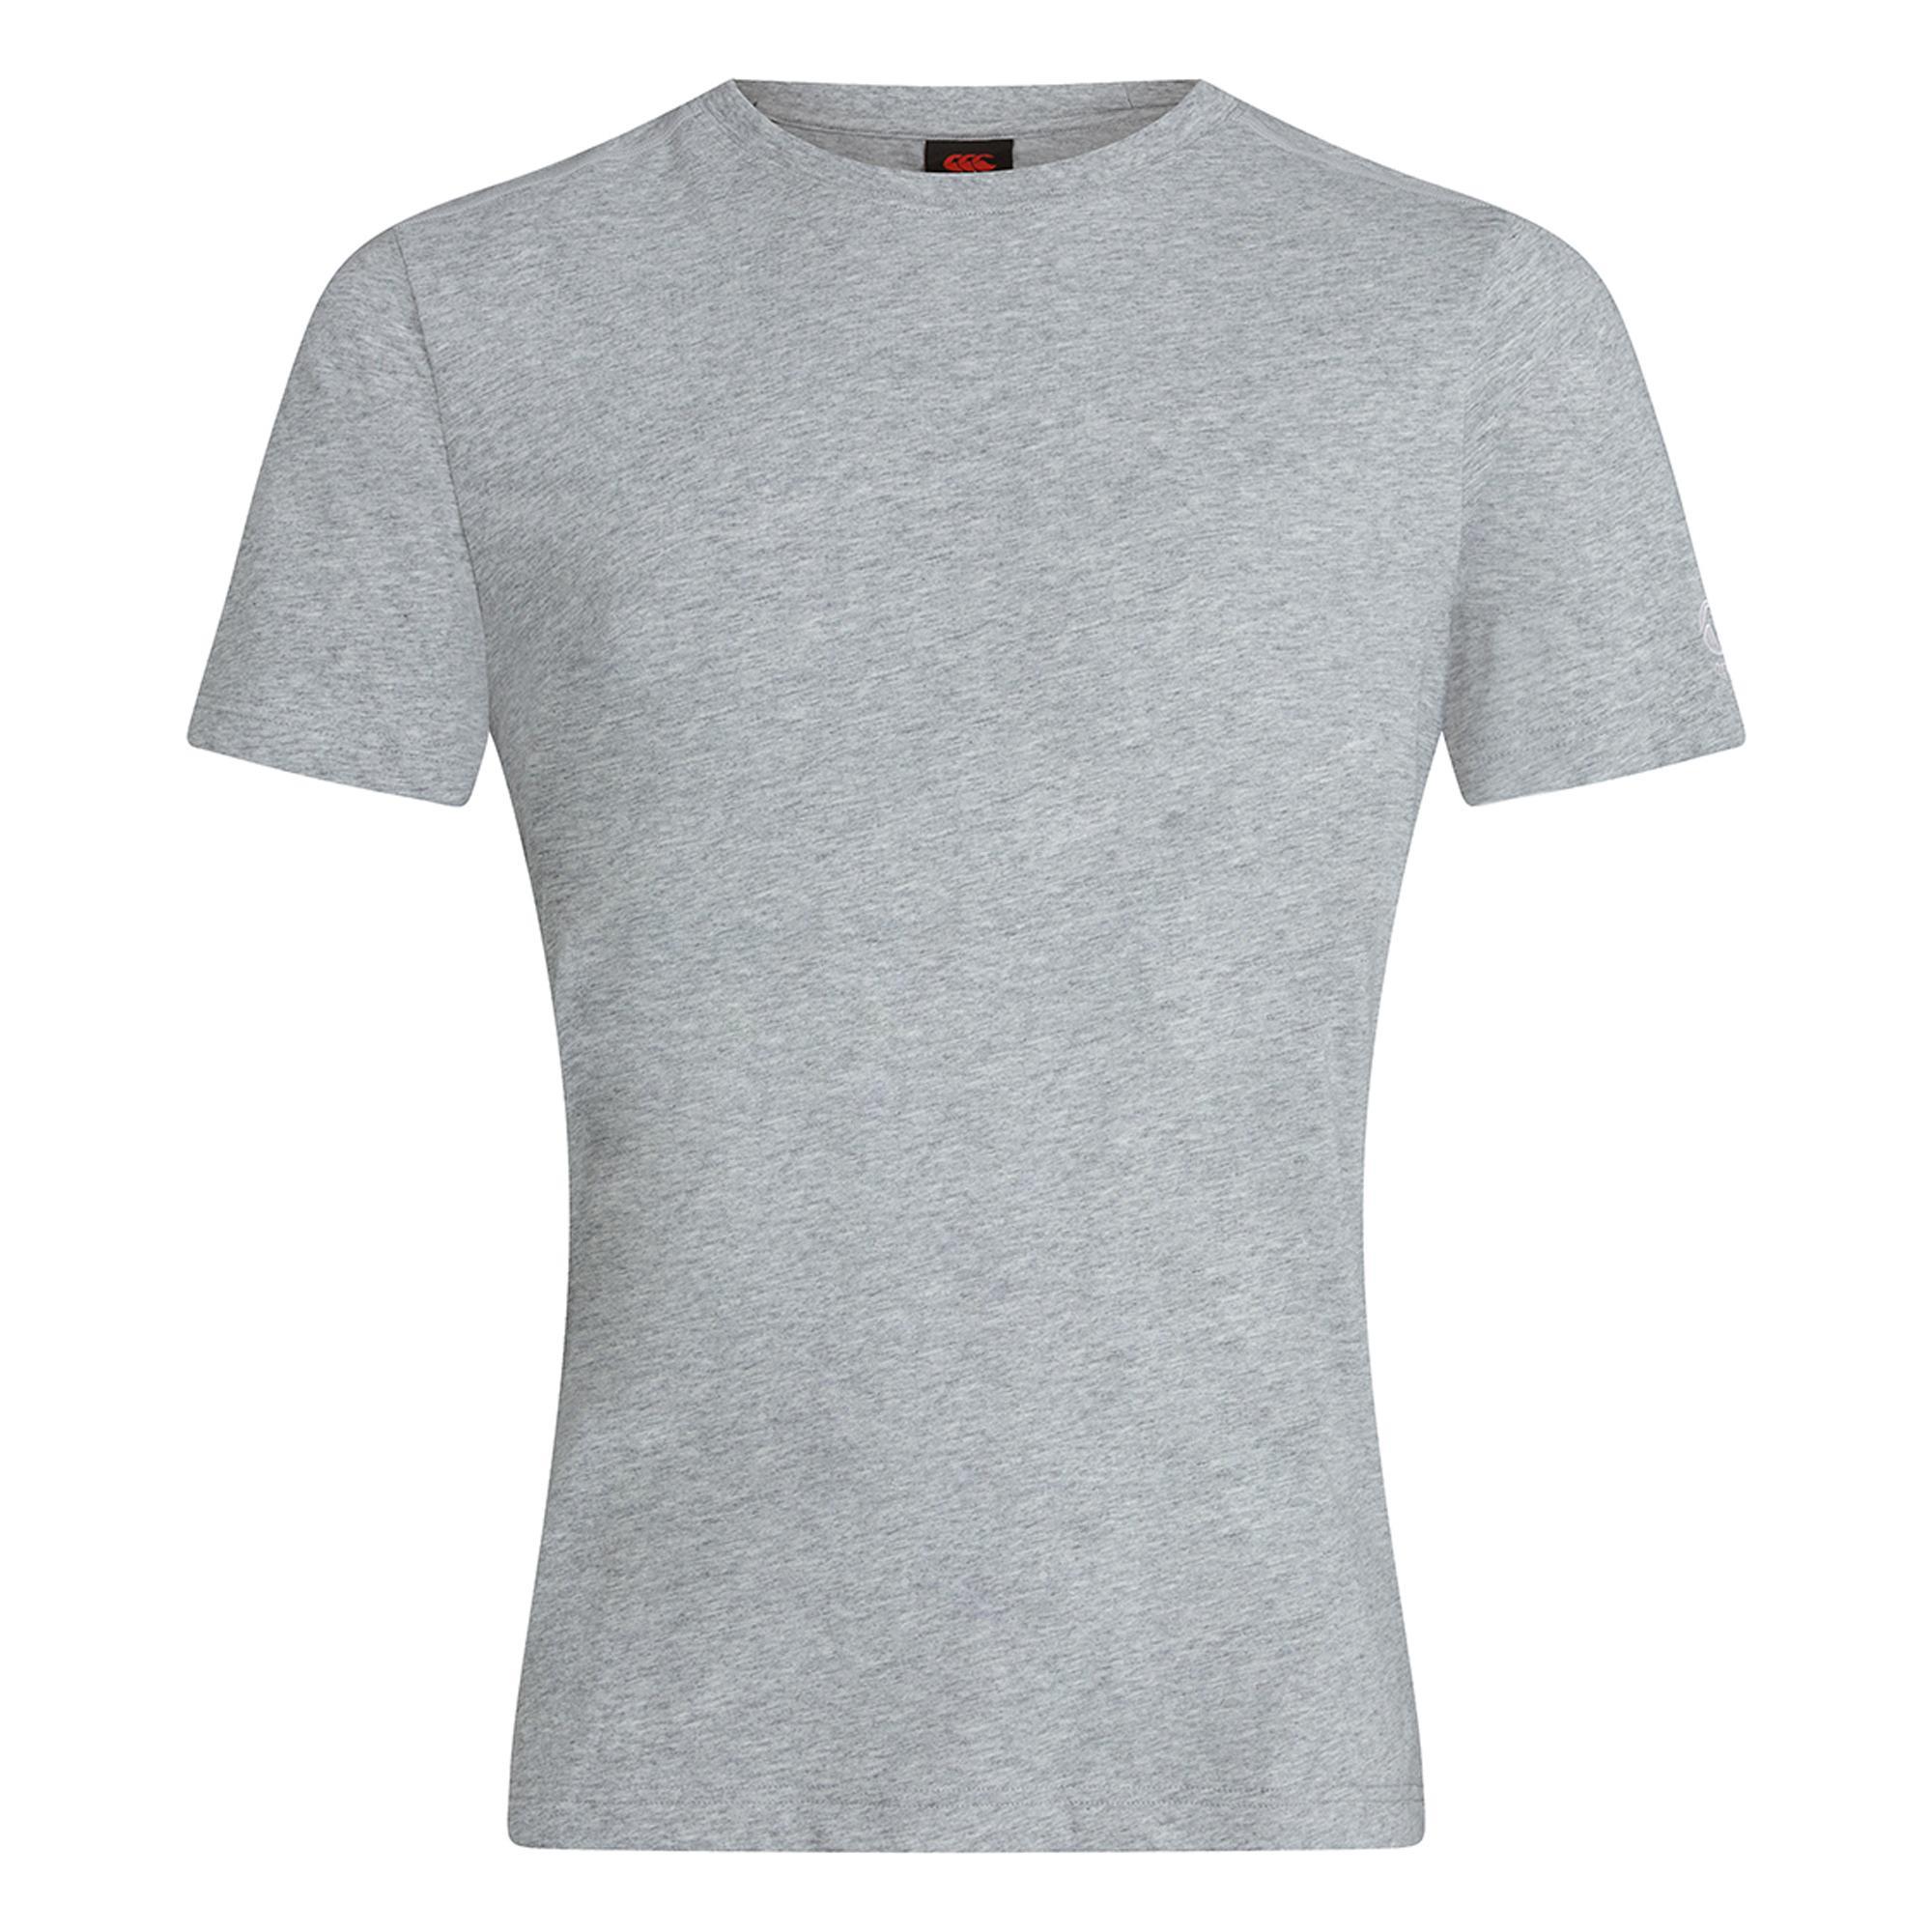 Canterbury Unisex Adult Club Plain T-Shirt (Grey Marl) (S)